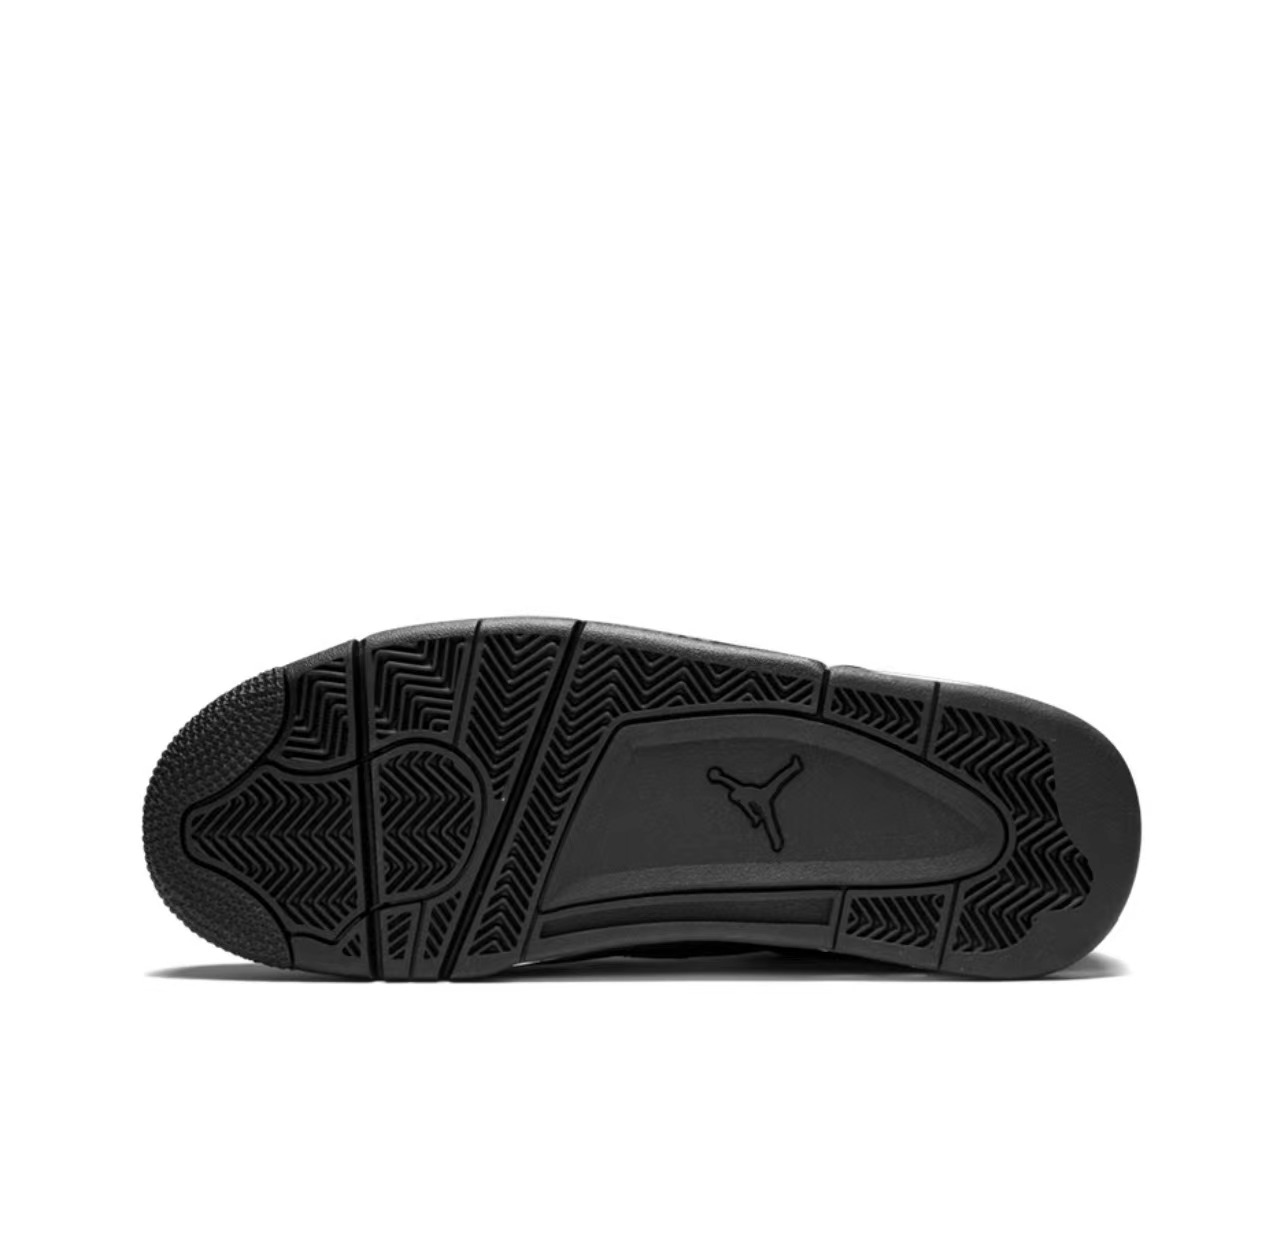 Air Jordan 4 Retro 11Lab4 - Black